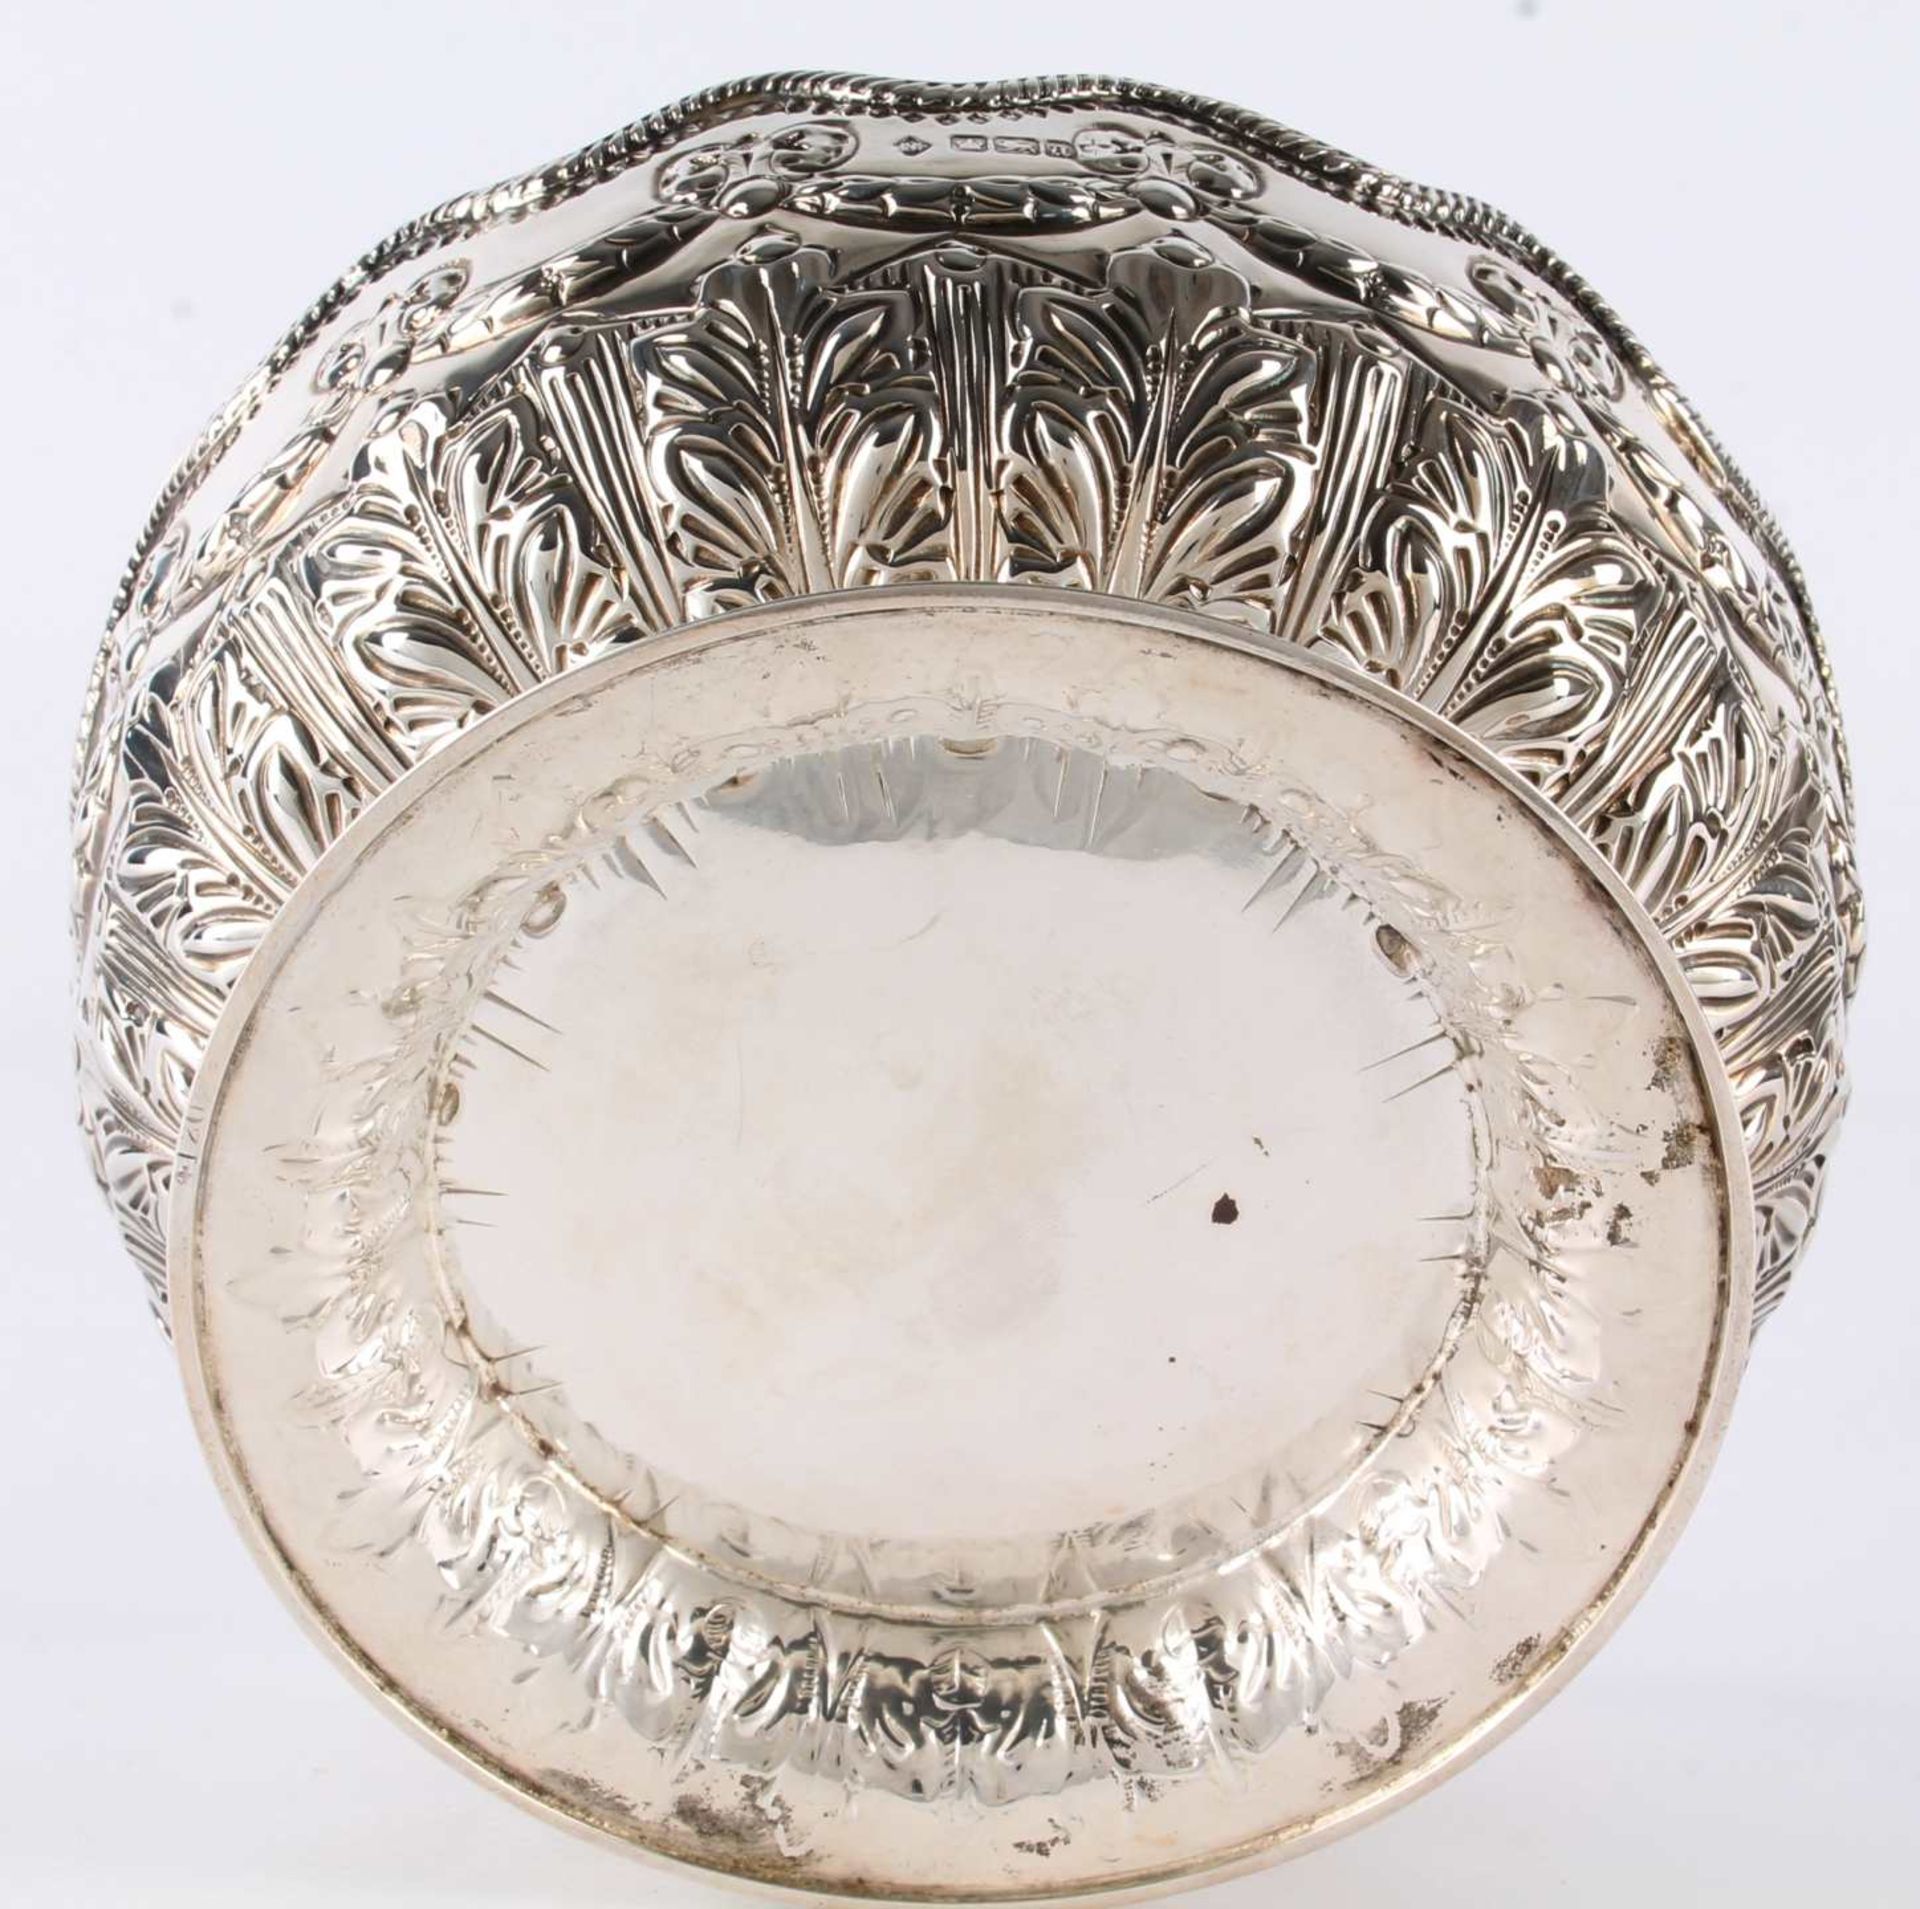 England 925 Silber Schale von 1893, sterling silver bowl art nouveau, - Image 4 of 4